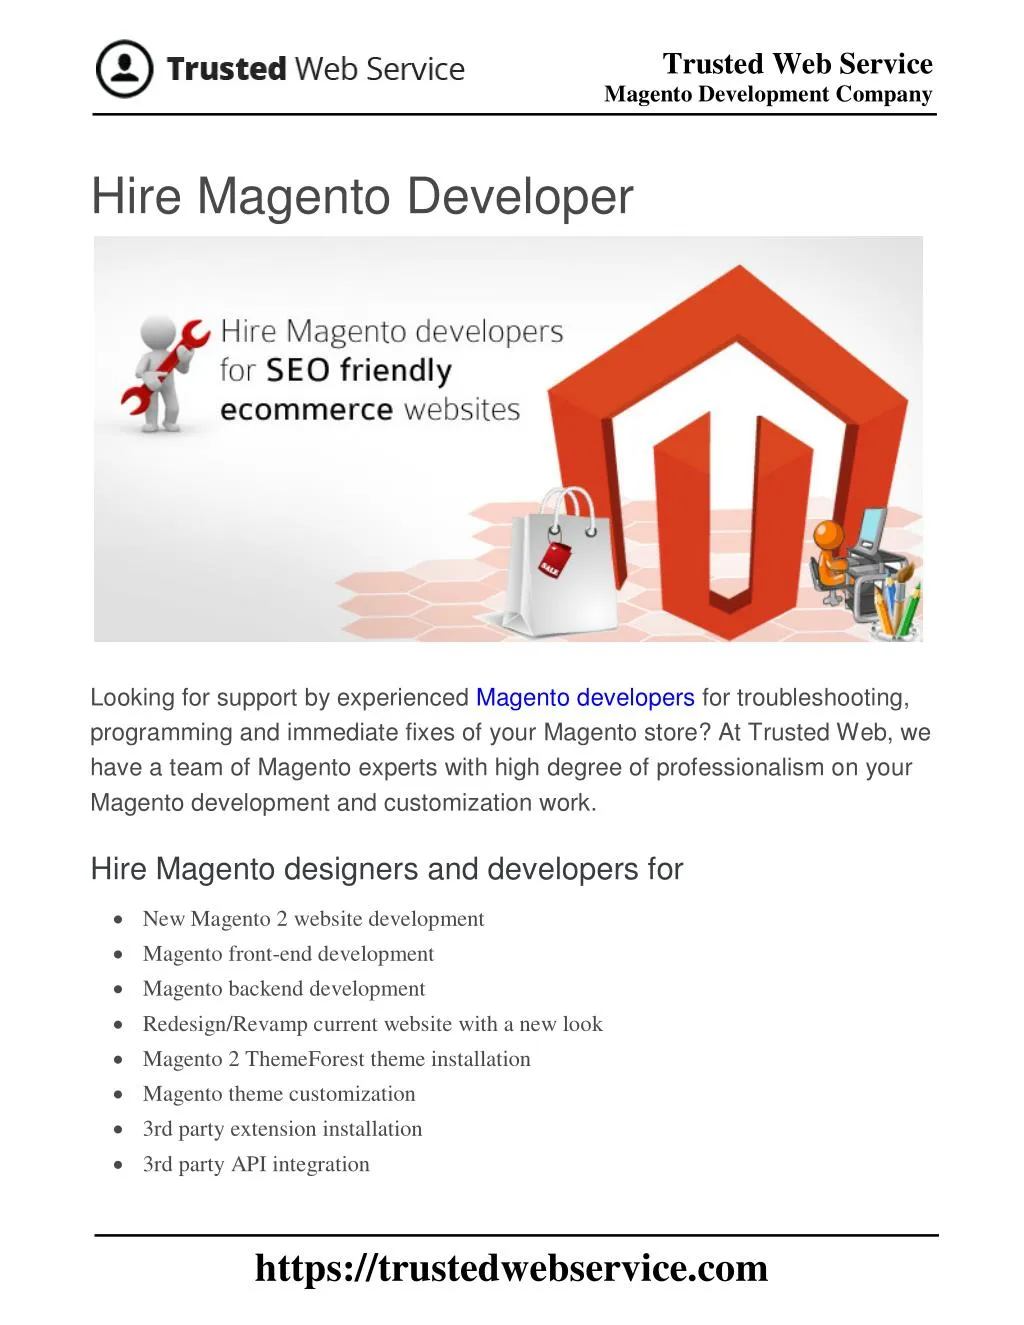 trusted web service magento development company